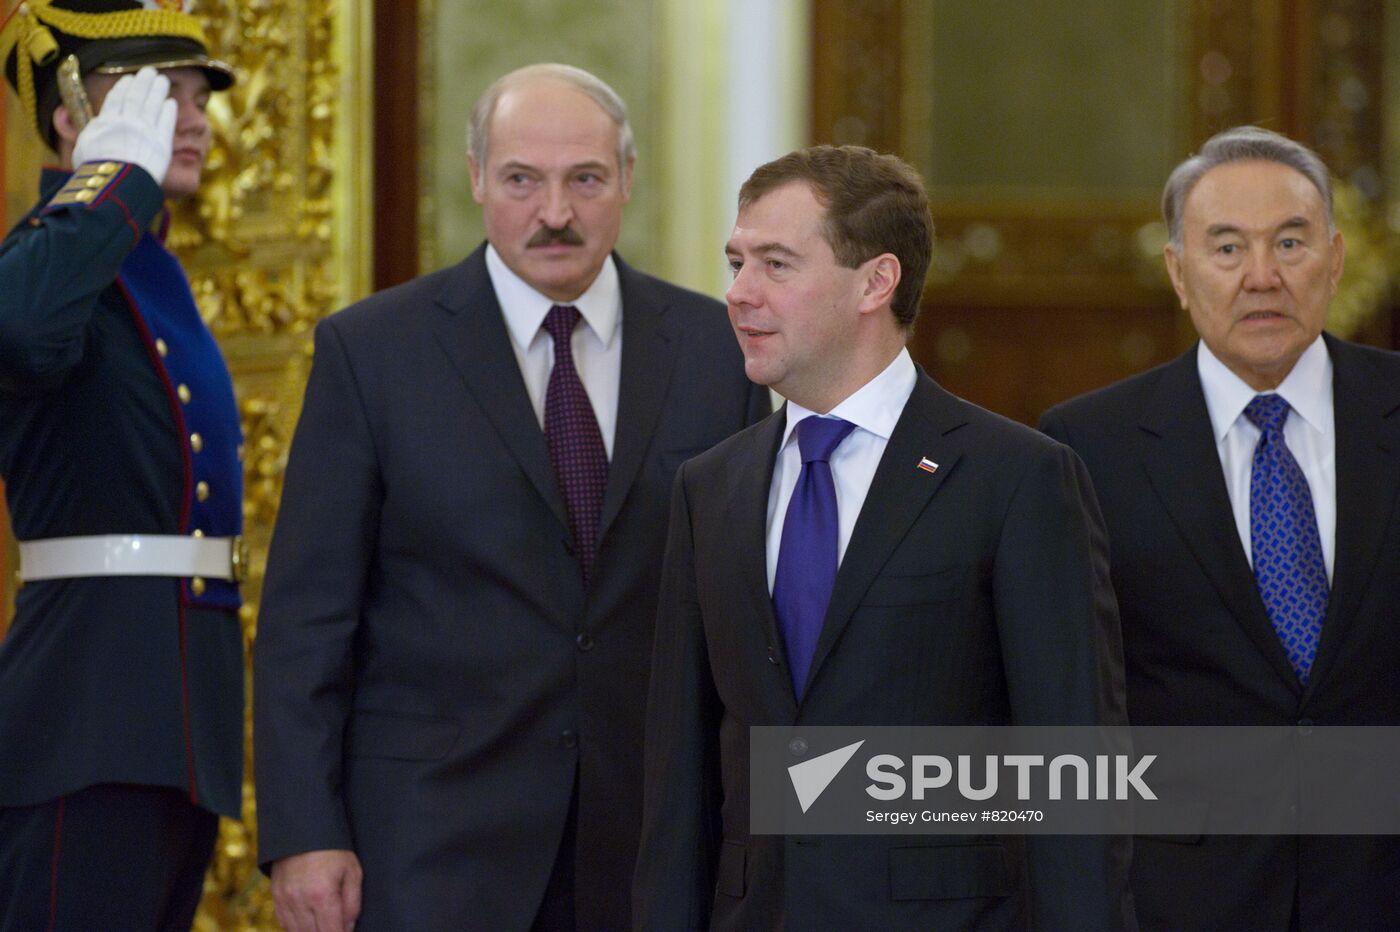 Dmitry Medvedev, Nursultan Nazarbayev, and Alexander Lukashenko